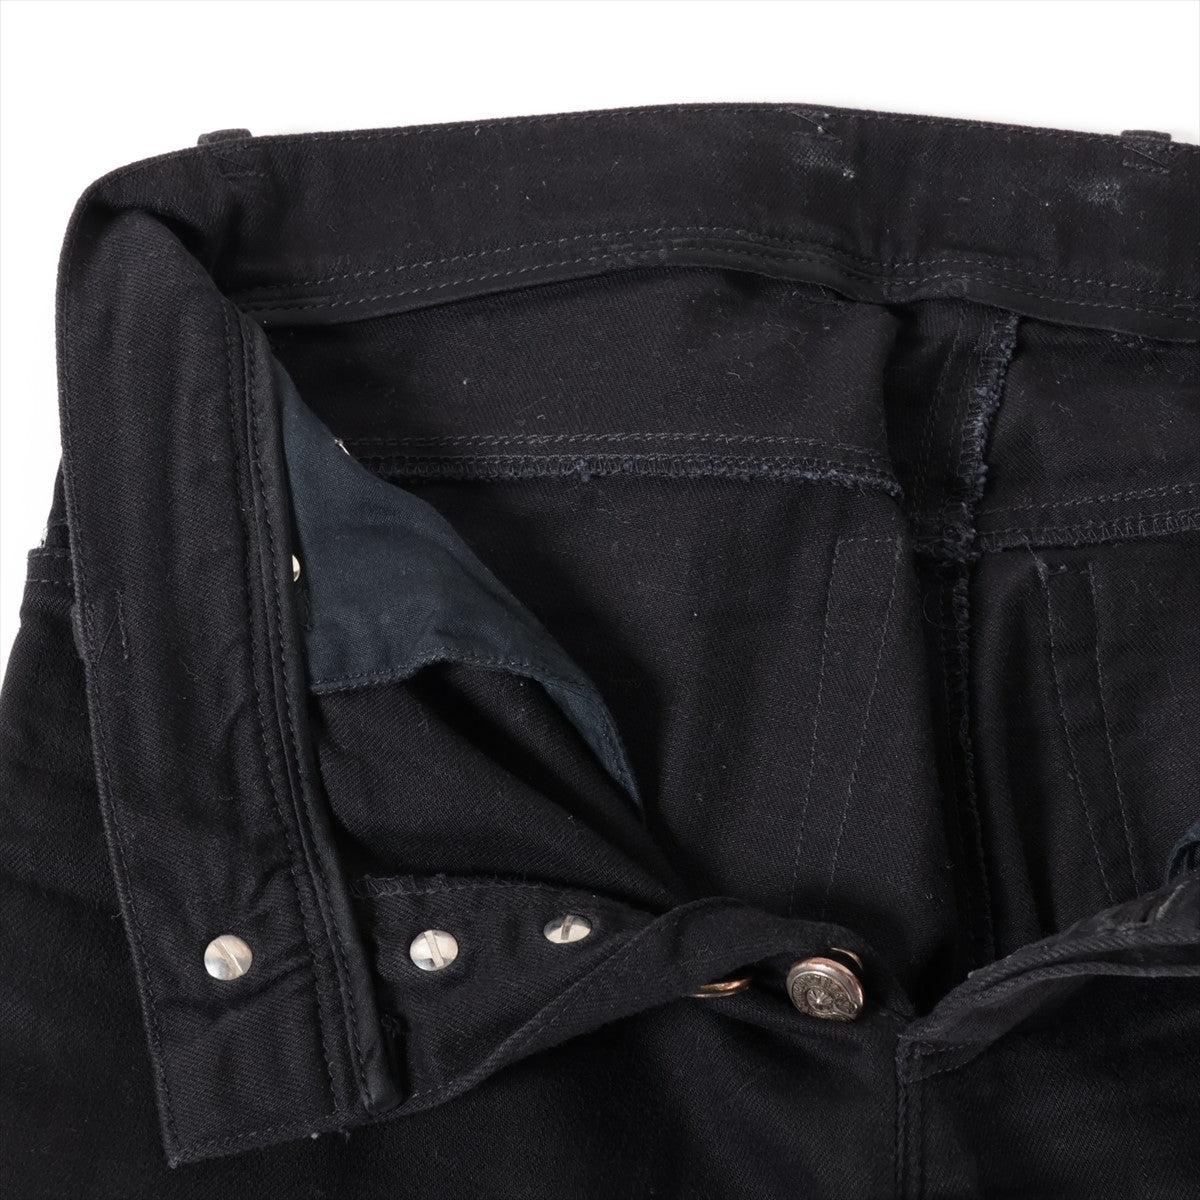 Chrome Hearts Denim pants Cotton size 30R Black Flerknee